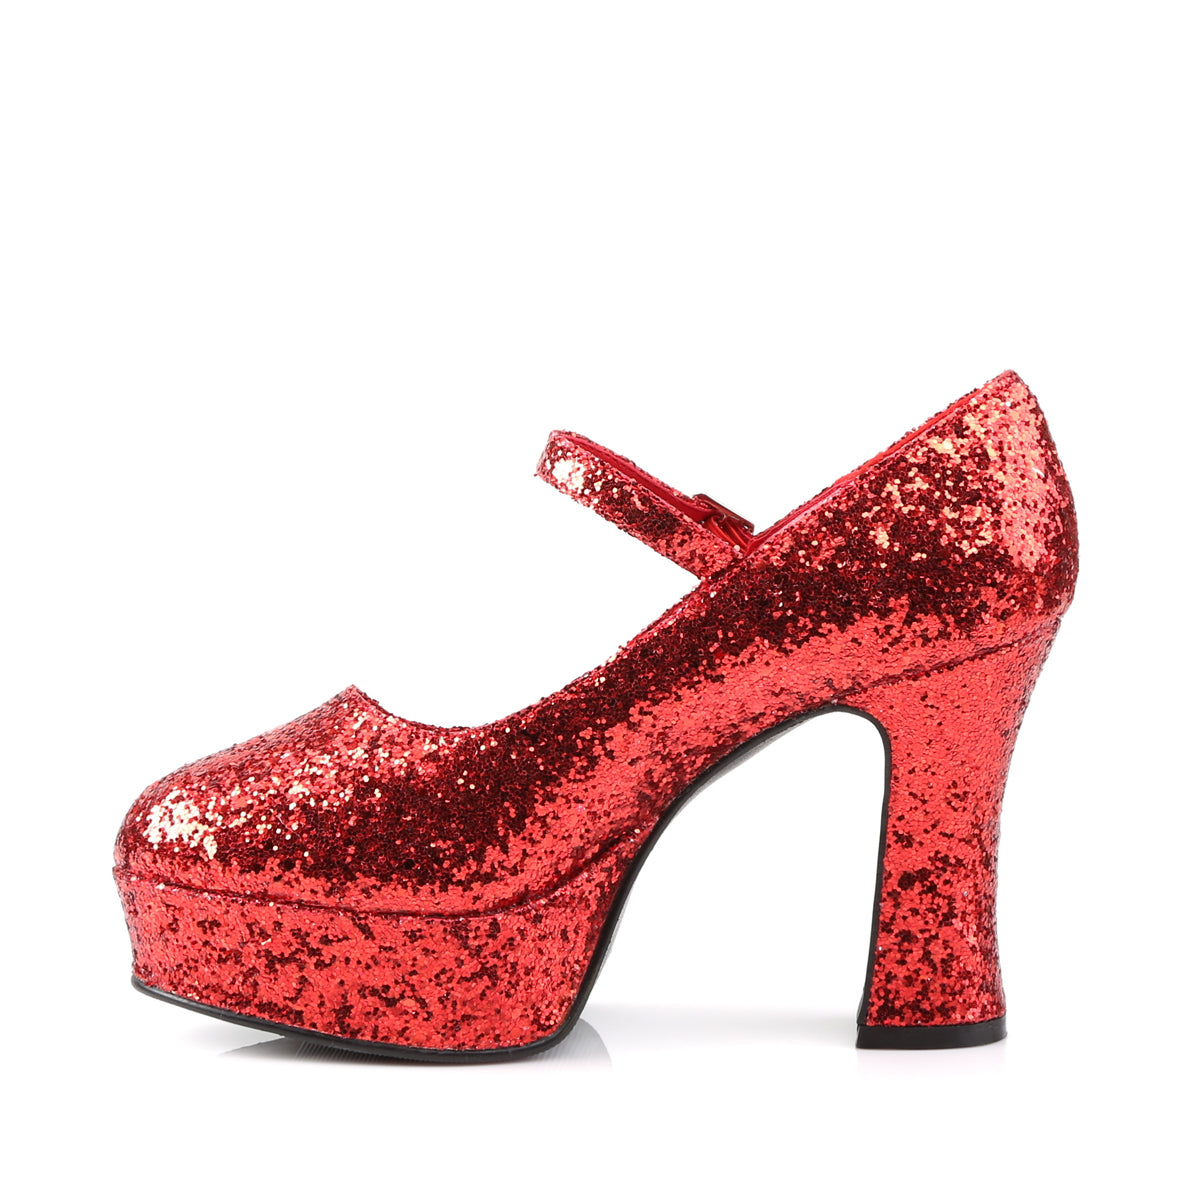 MARYJANE-50G Funtasma Fantasy Red Gltr Women's Shoes [Fancy Dress Footwear]